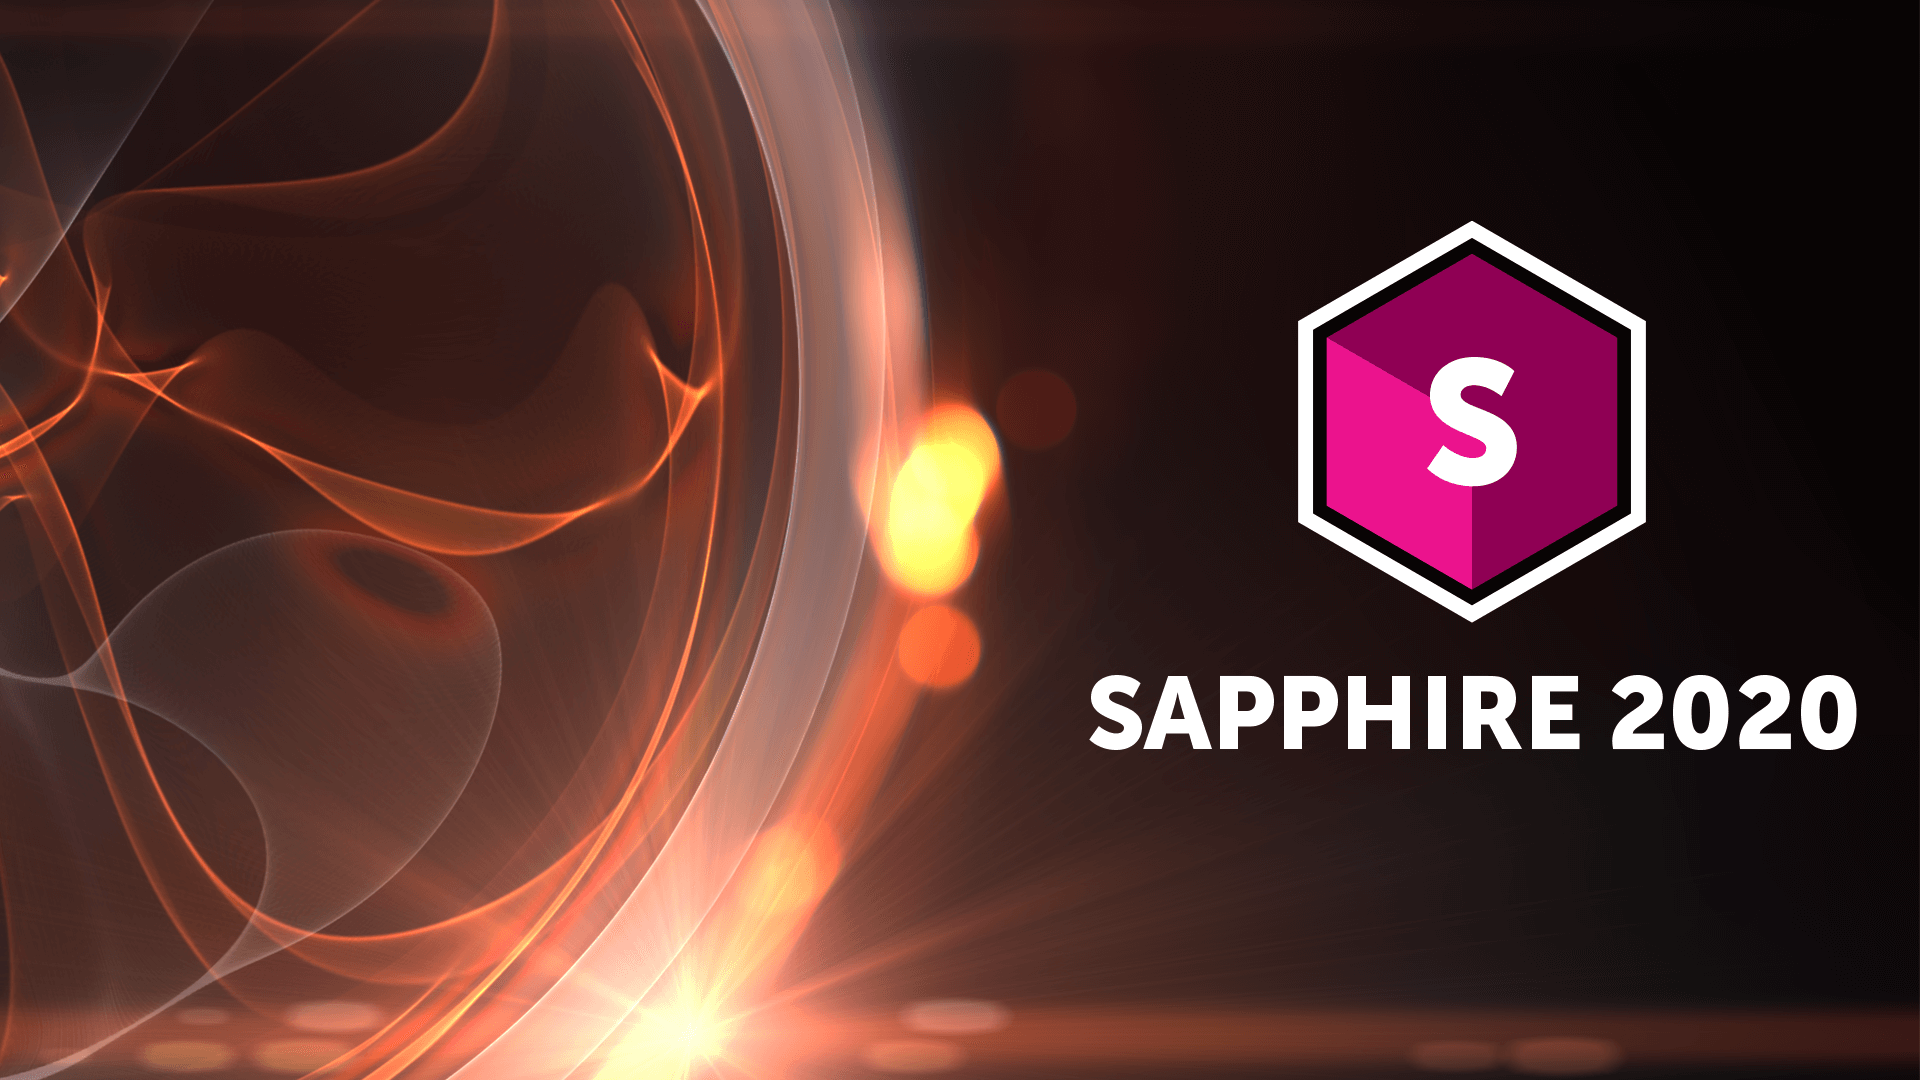 boris-fx-sapphire-2020-banner.png